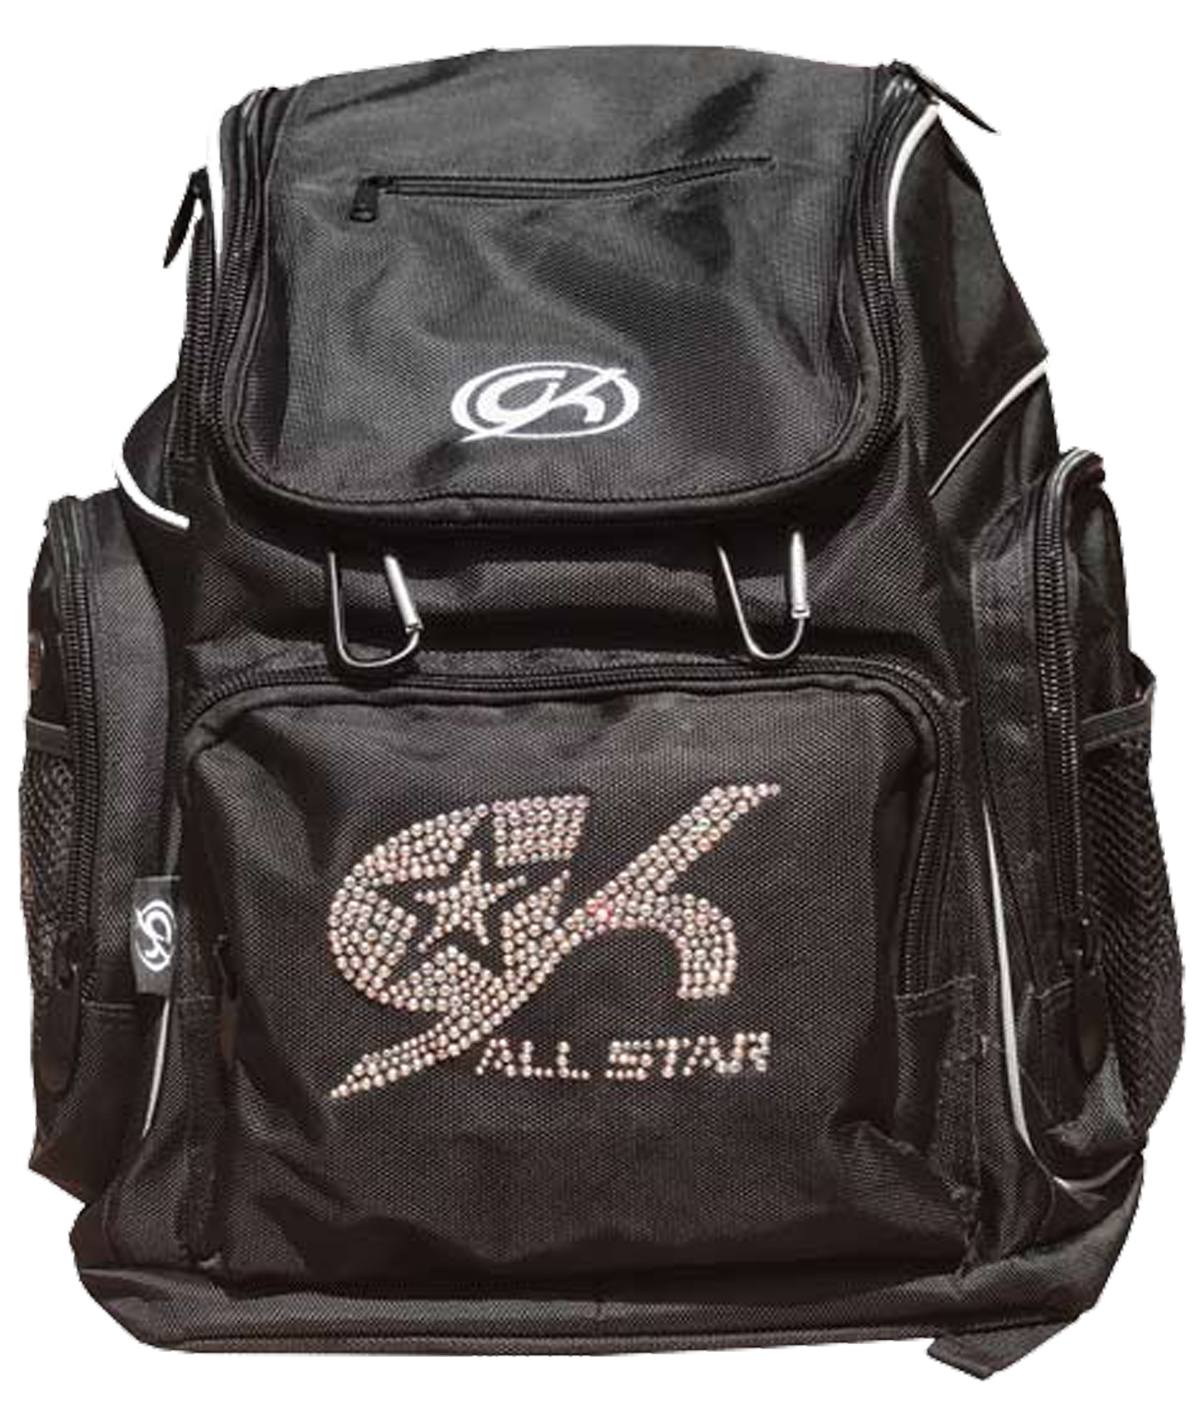 GK All Star Essentials Backpack